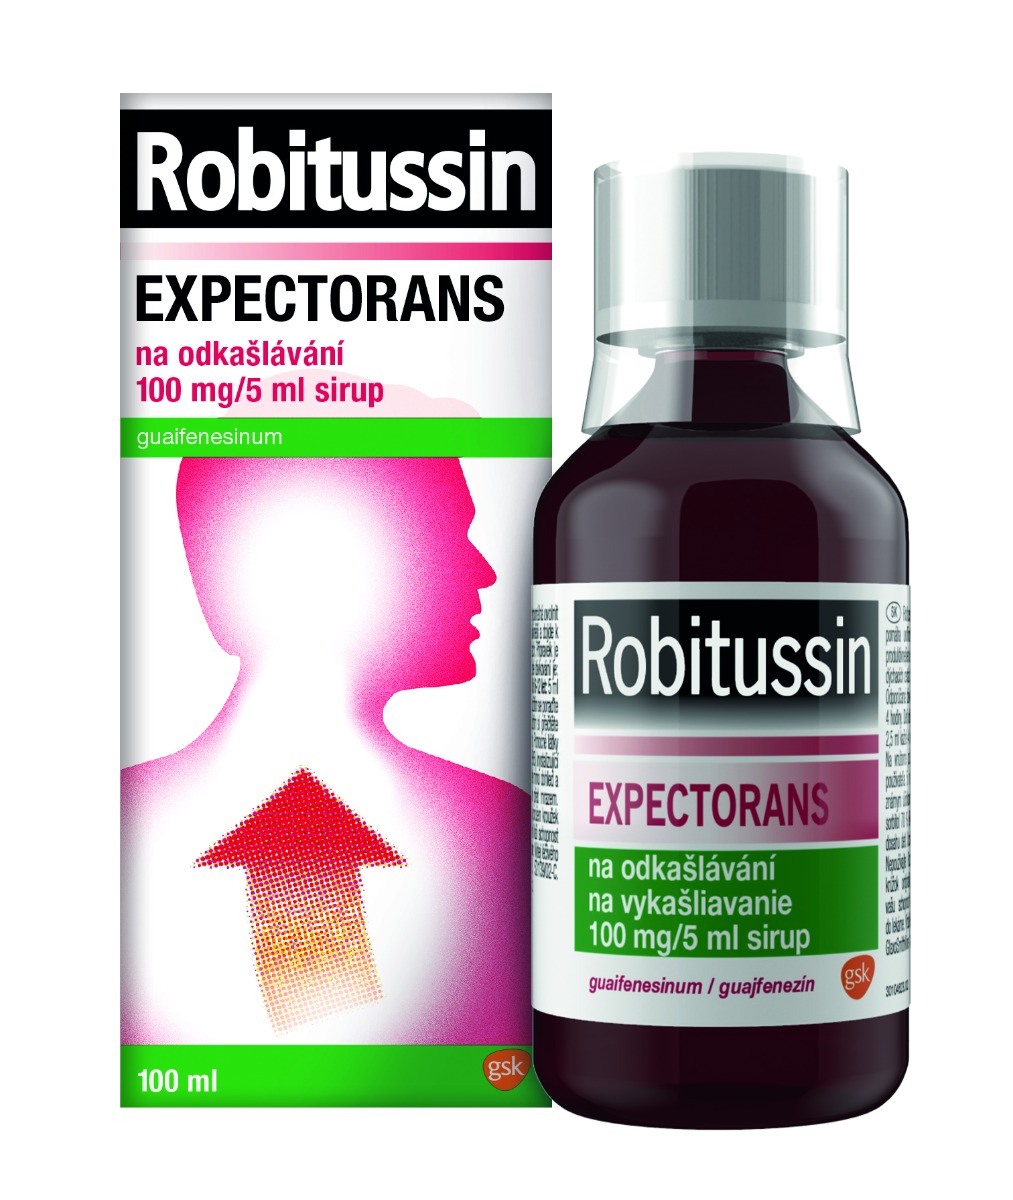 Robitussin Expectorans na odkašlávání 100 mg/5 ml sirup 100 ml Robitussin